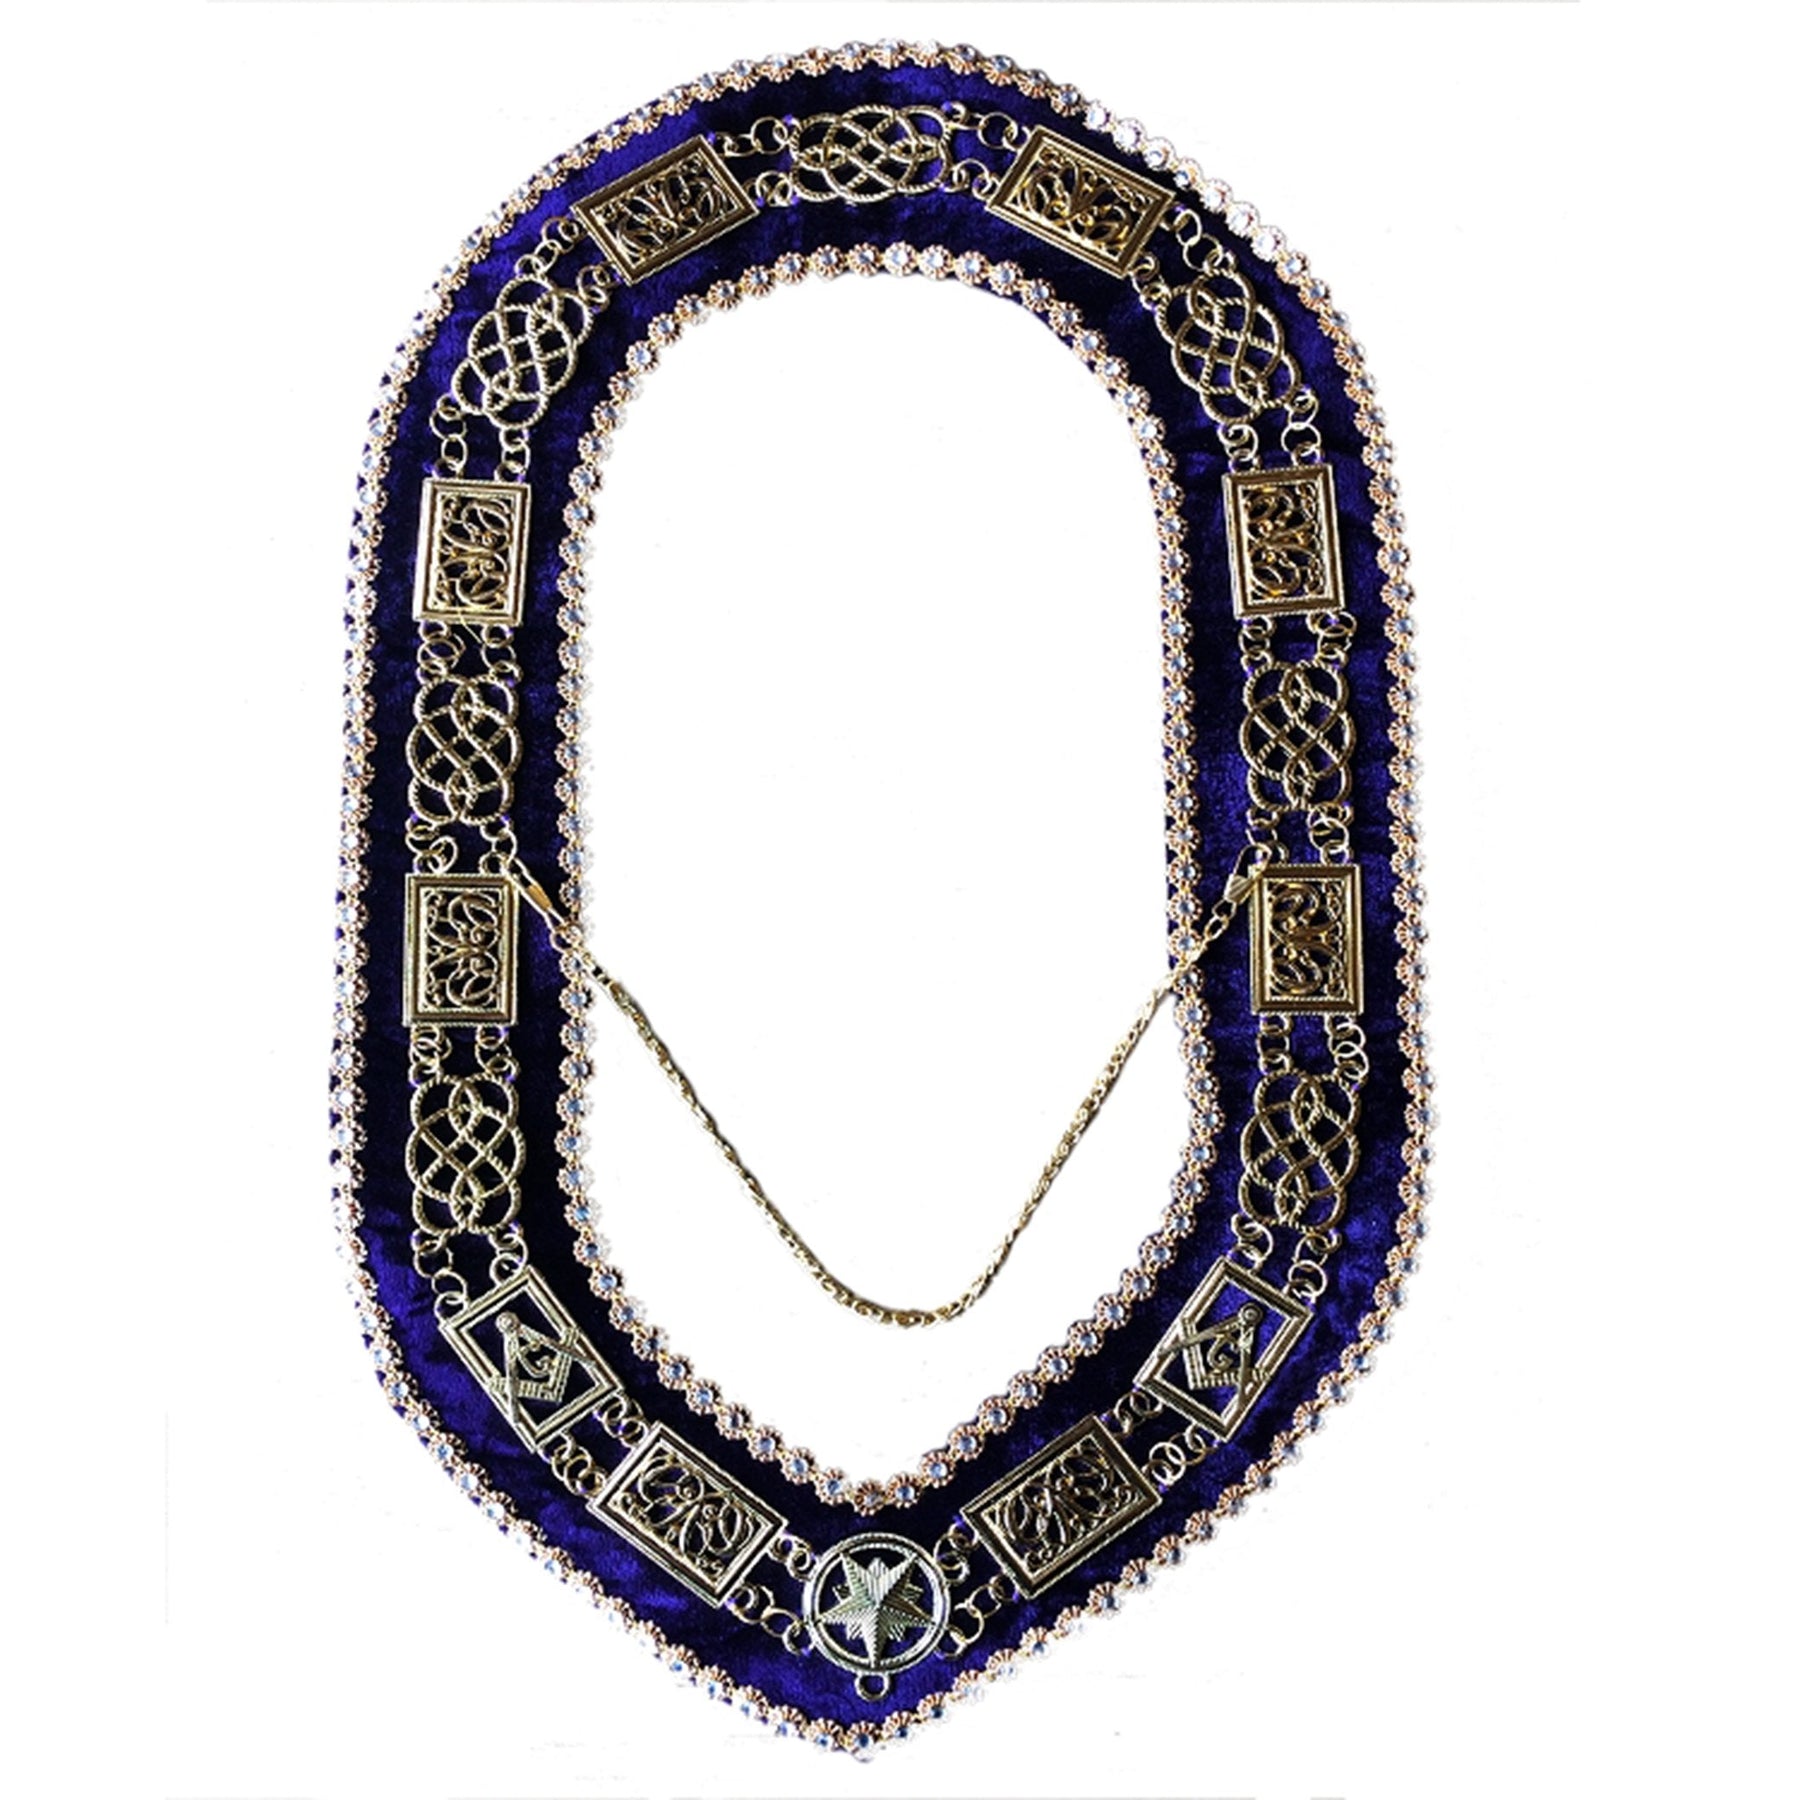 Grand Lodge - Chain Collar with Rhinestones - Gold/Silver on Purple Velvet - Bricks Masons